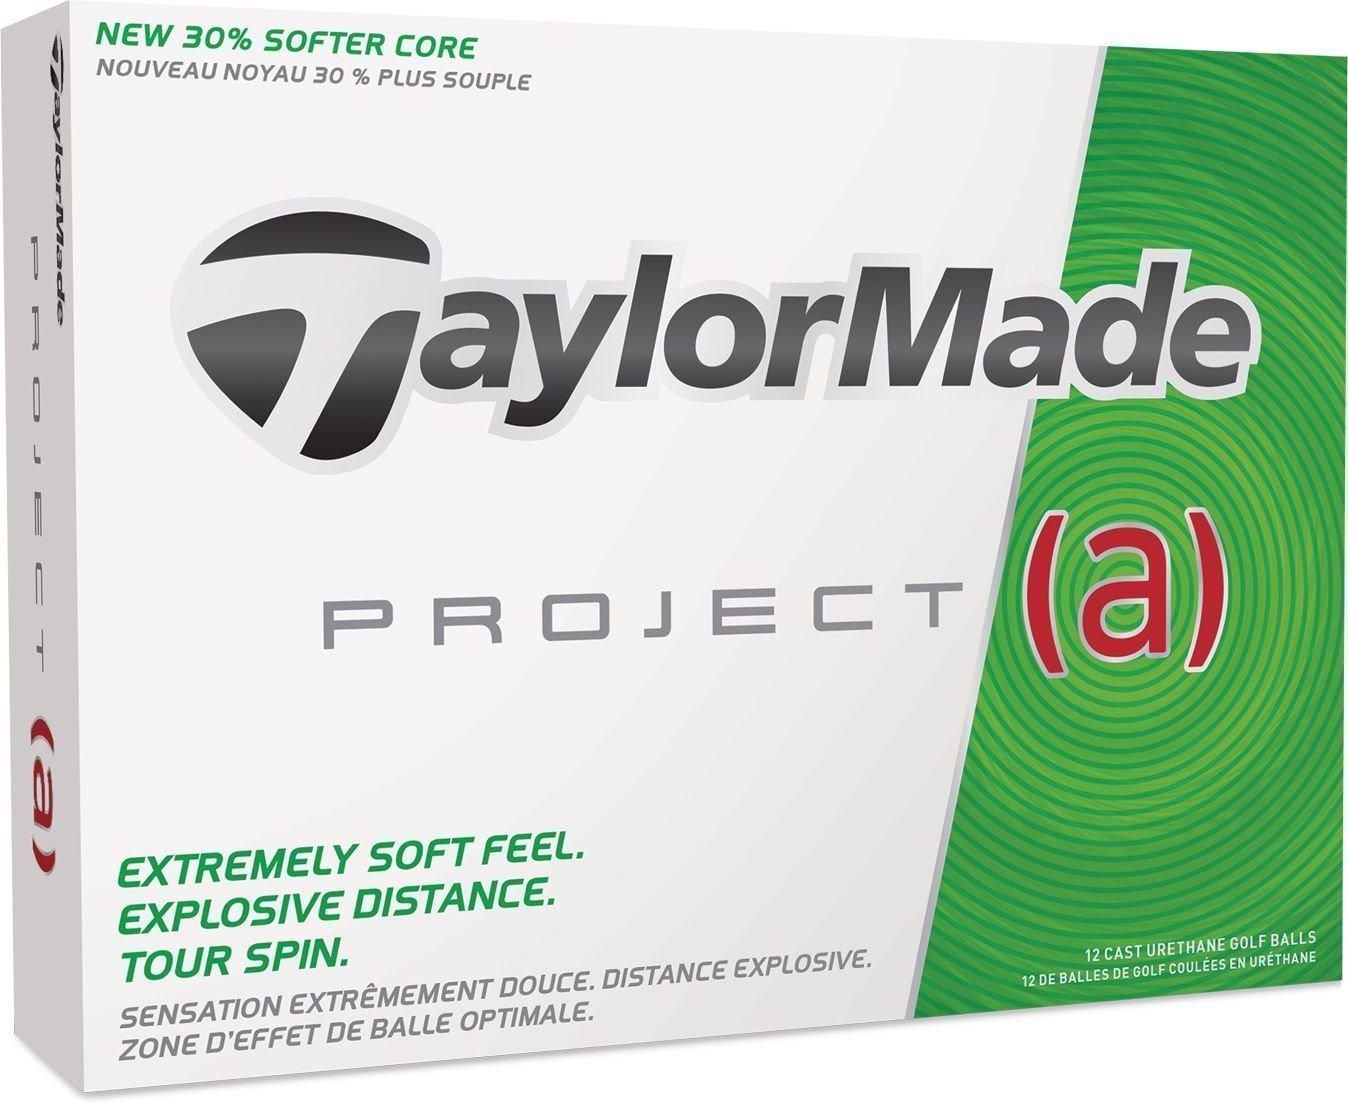 Balles de golf TaylorMade Project (a) Ball White